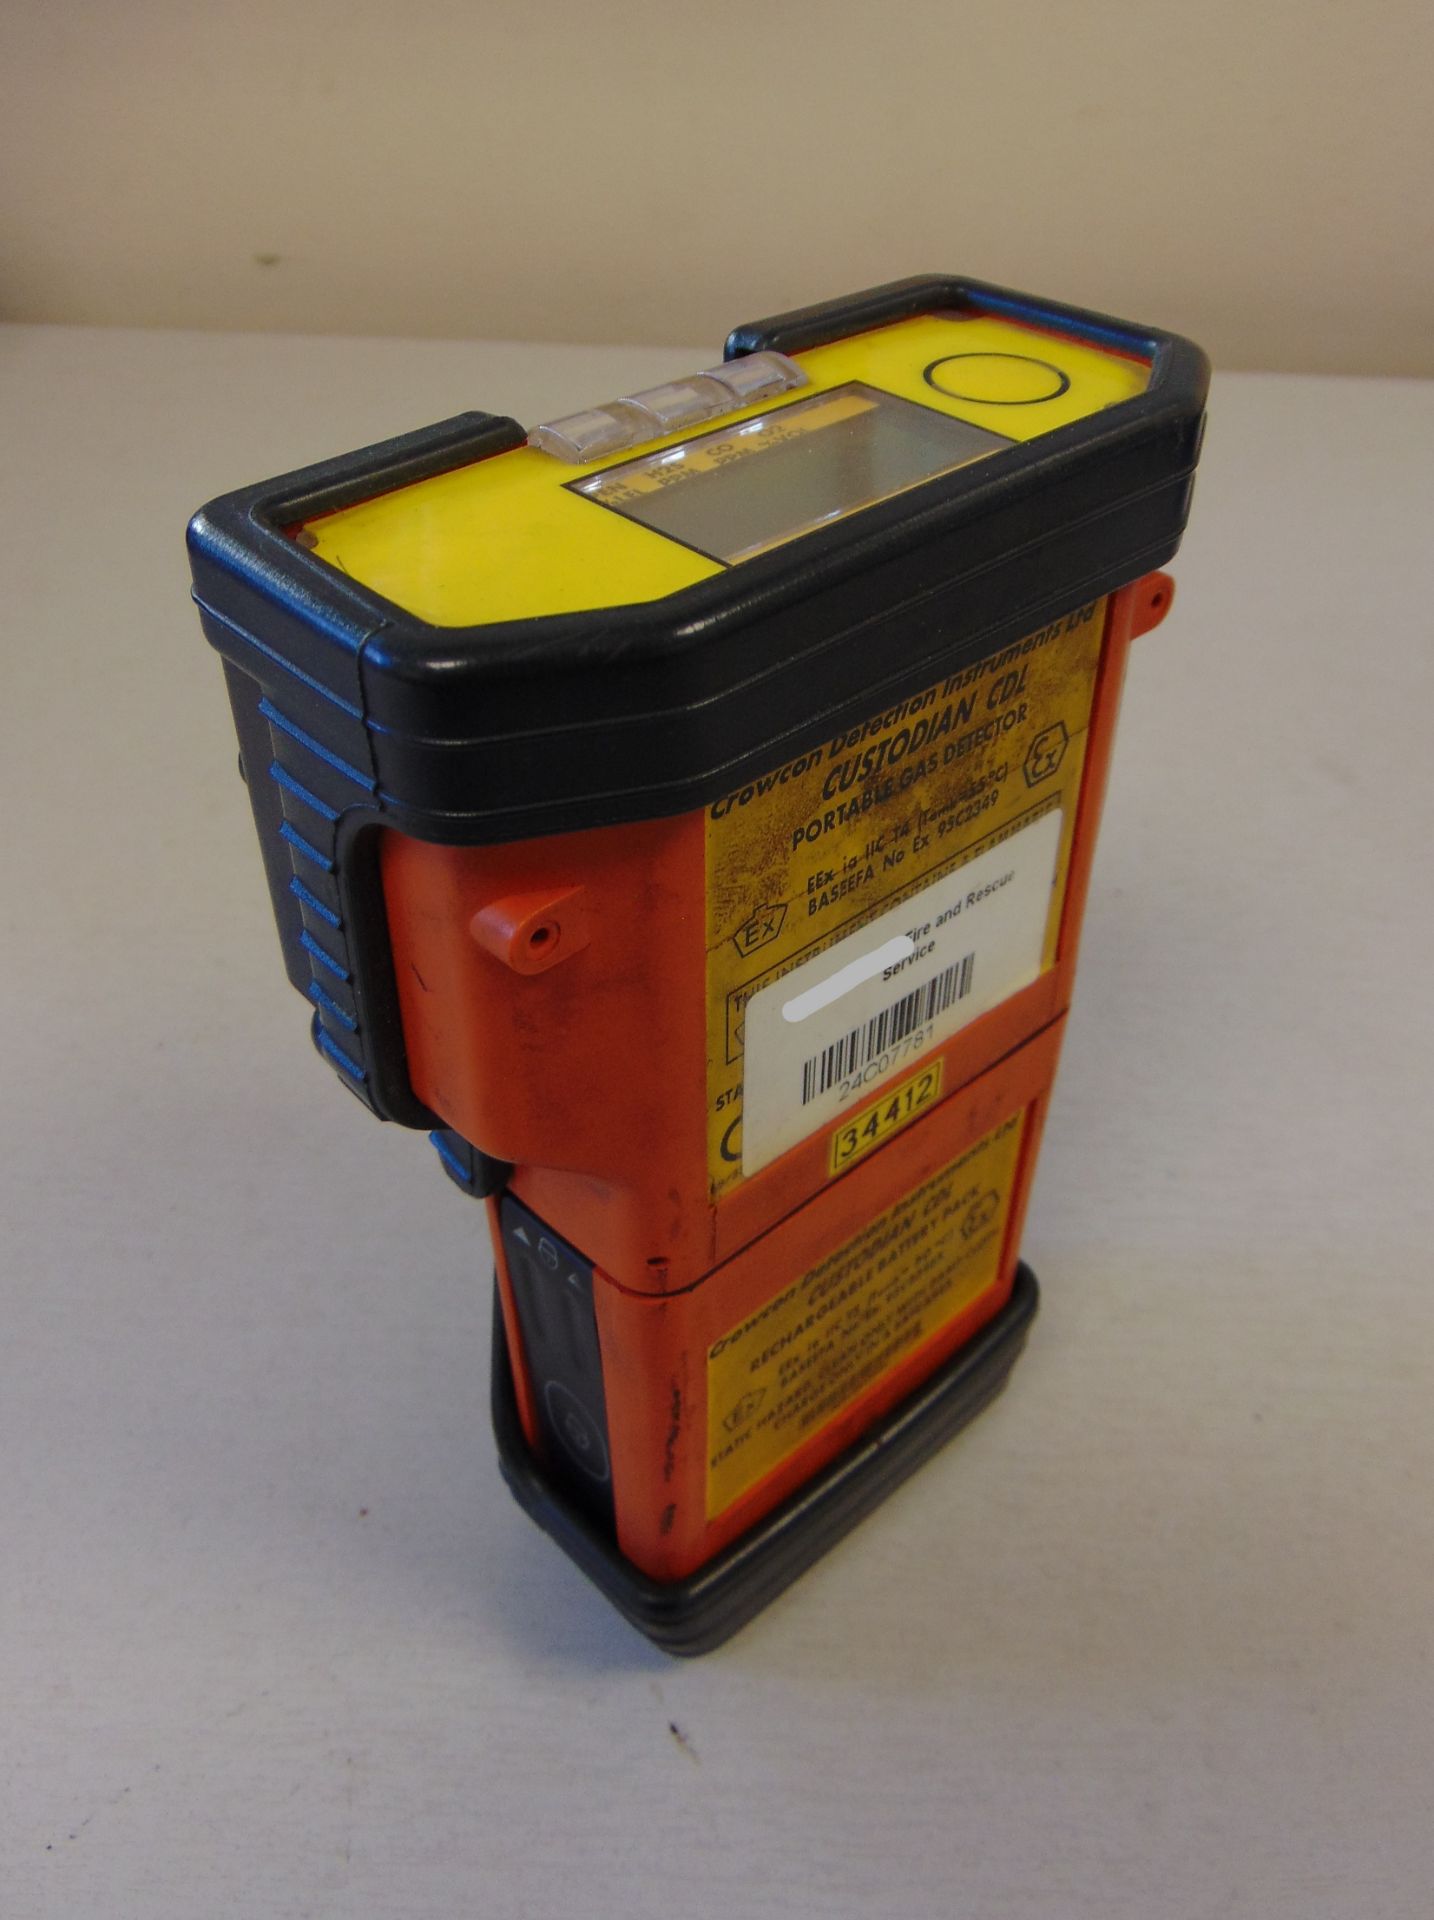 Crowcon Custodian CDL Portable Gas Monitor Kit - Image 4 of 9